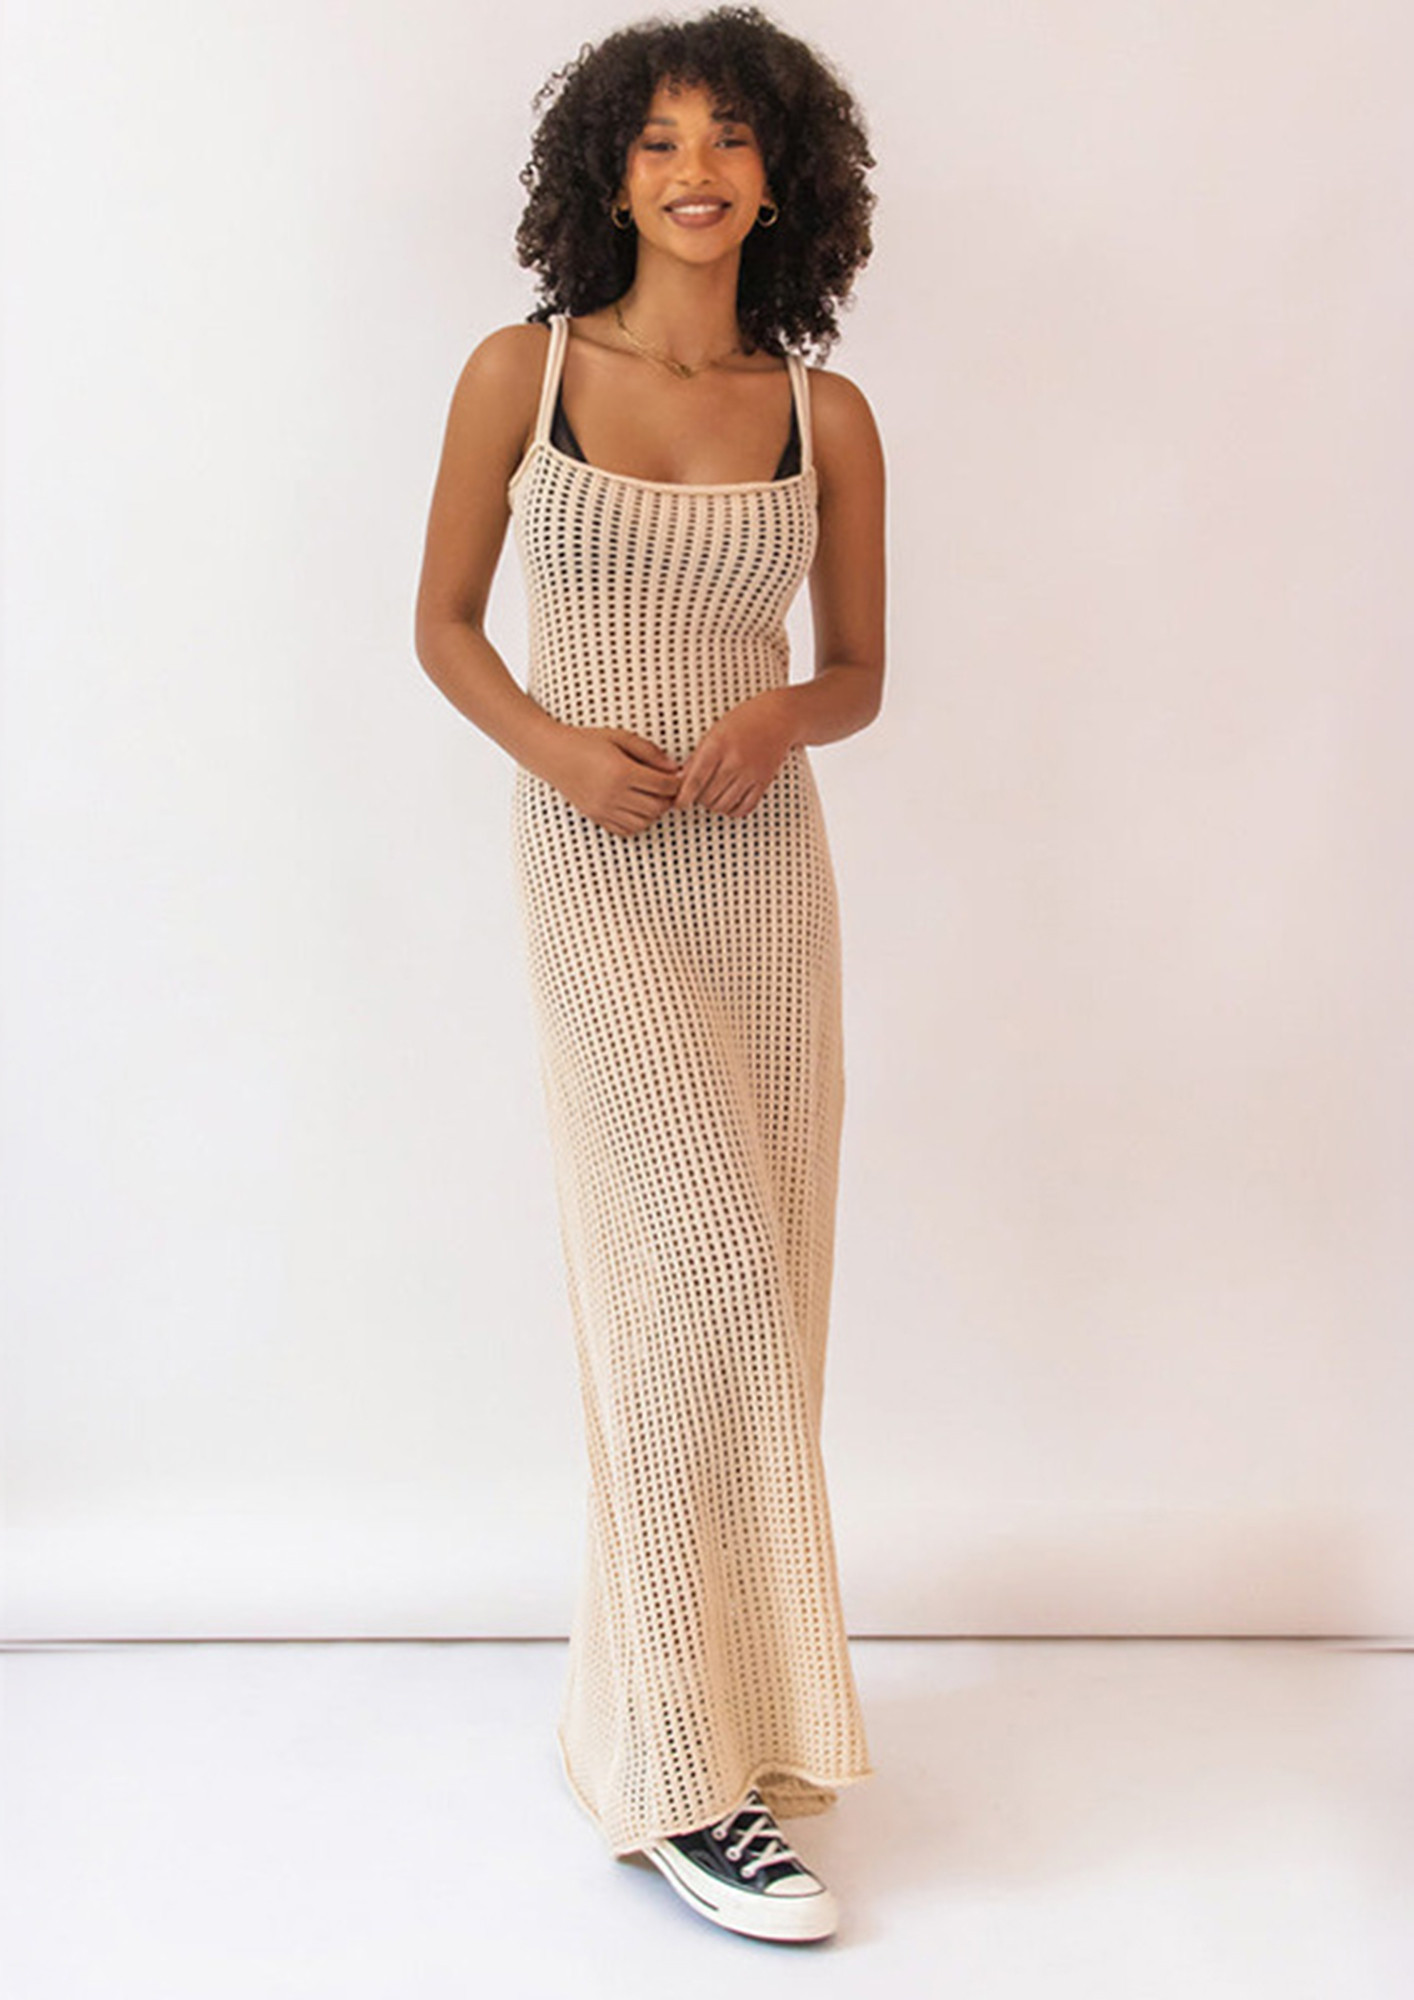 White Crochet Dress - Crochet Maxi Dress - Sleeveless Knit Dress - Lulus